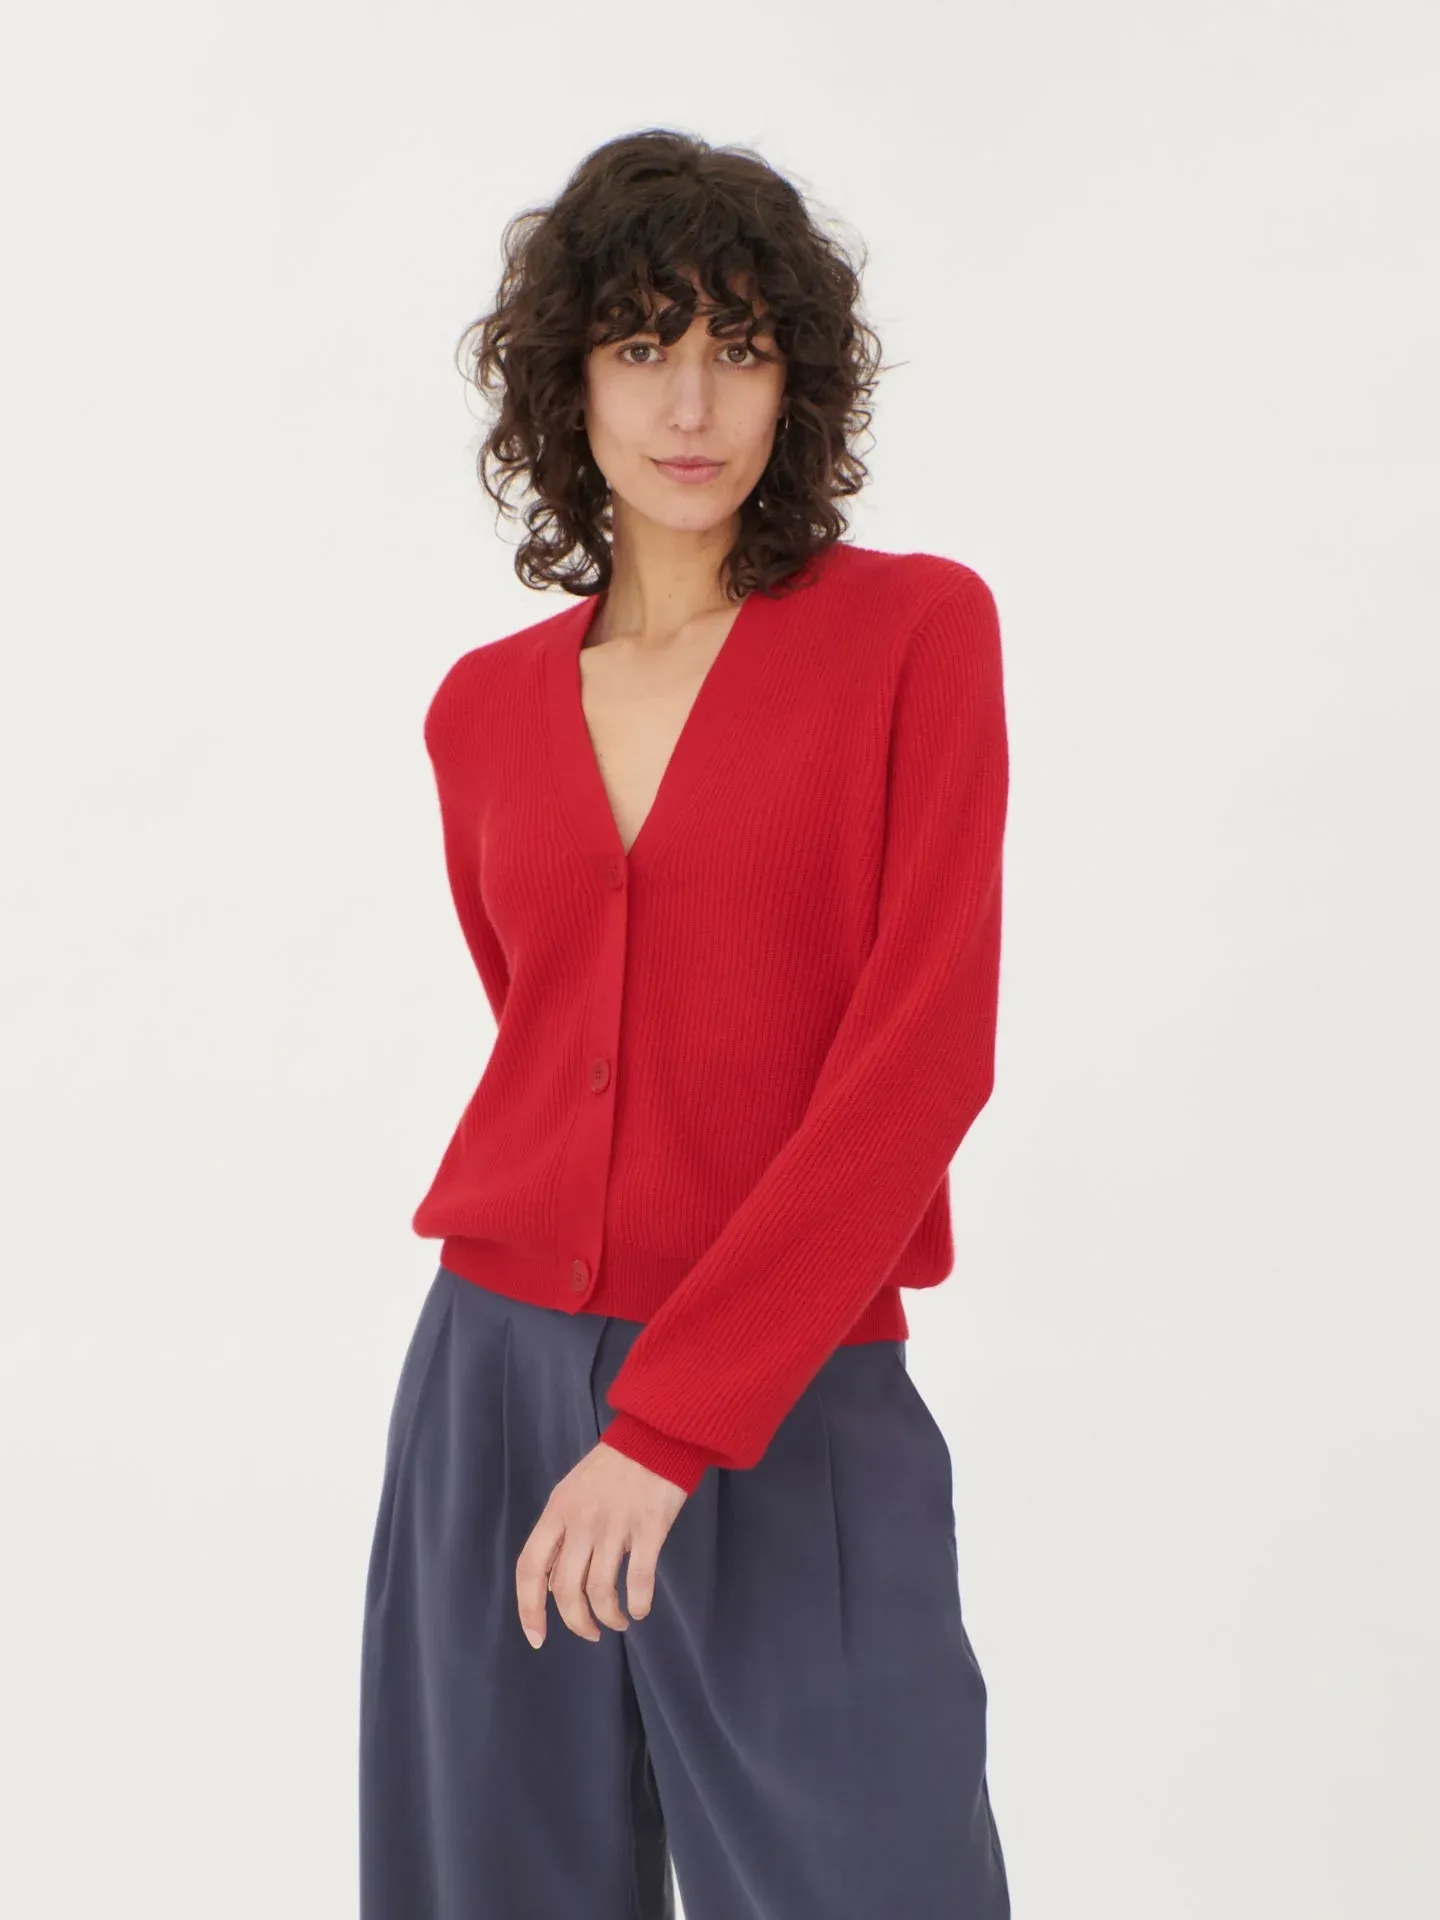 Spring Sale: Embrace Gobi Cashmere - Spring Fashion Trends | GOBI Cashmere